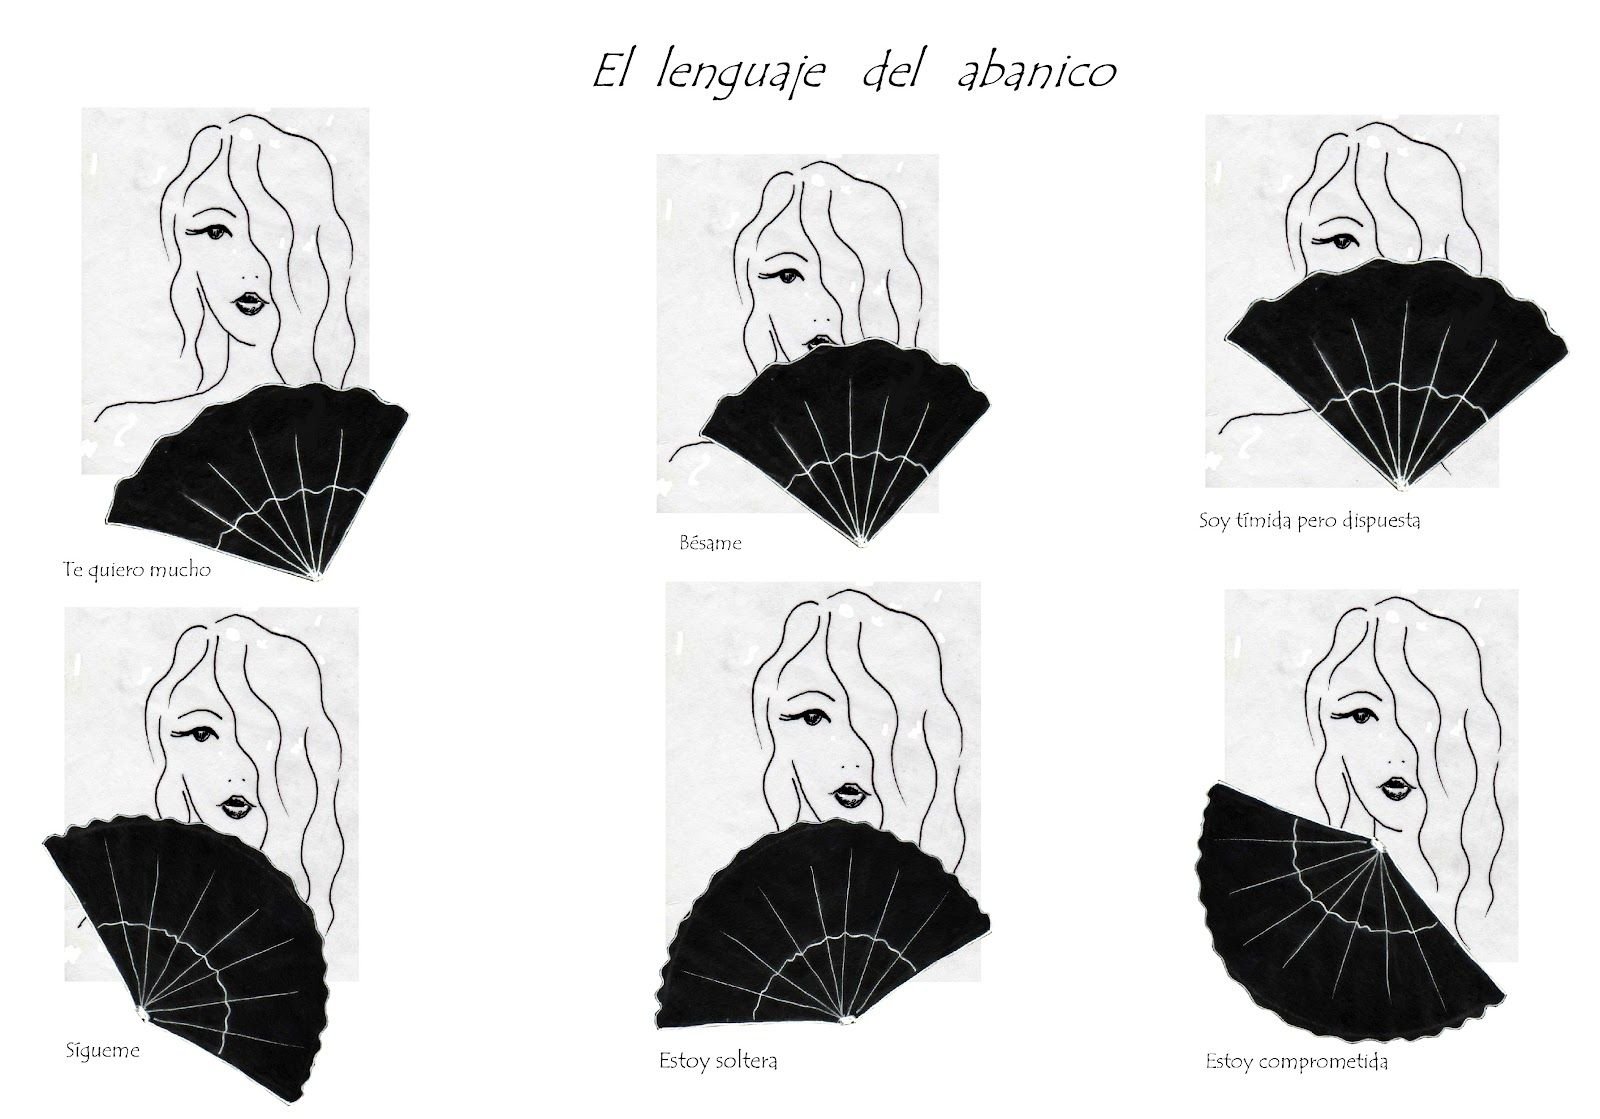 El lenguaje simbólico del abanico by Esther Rubiella